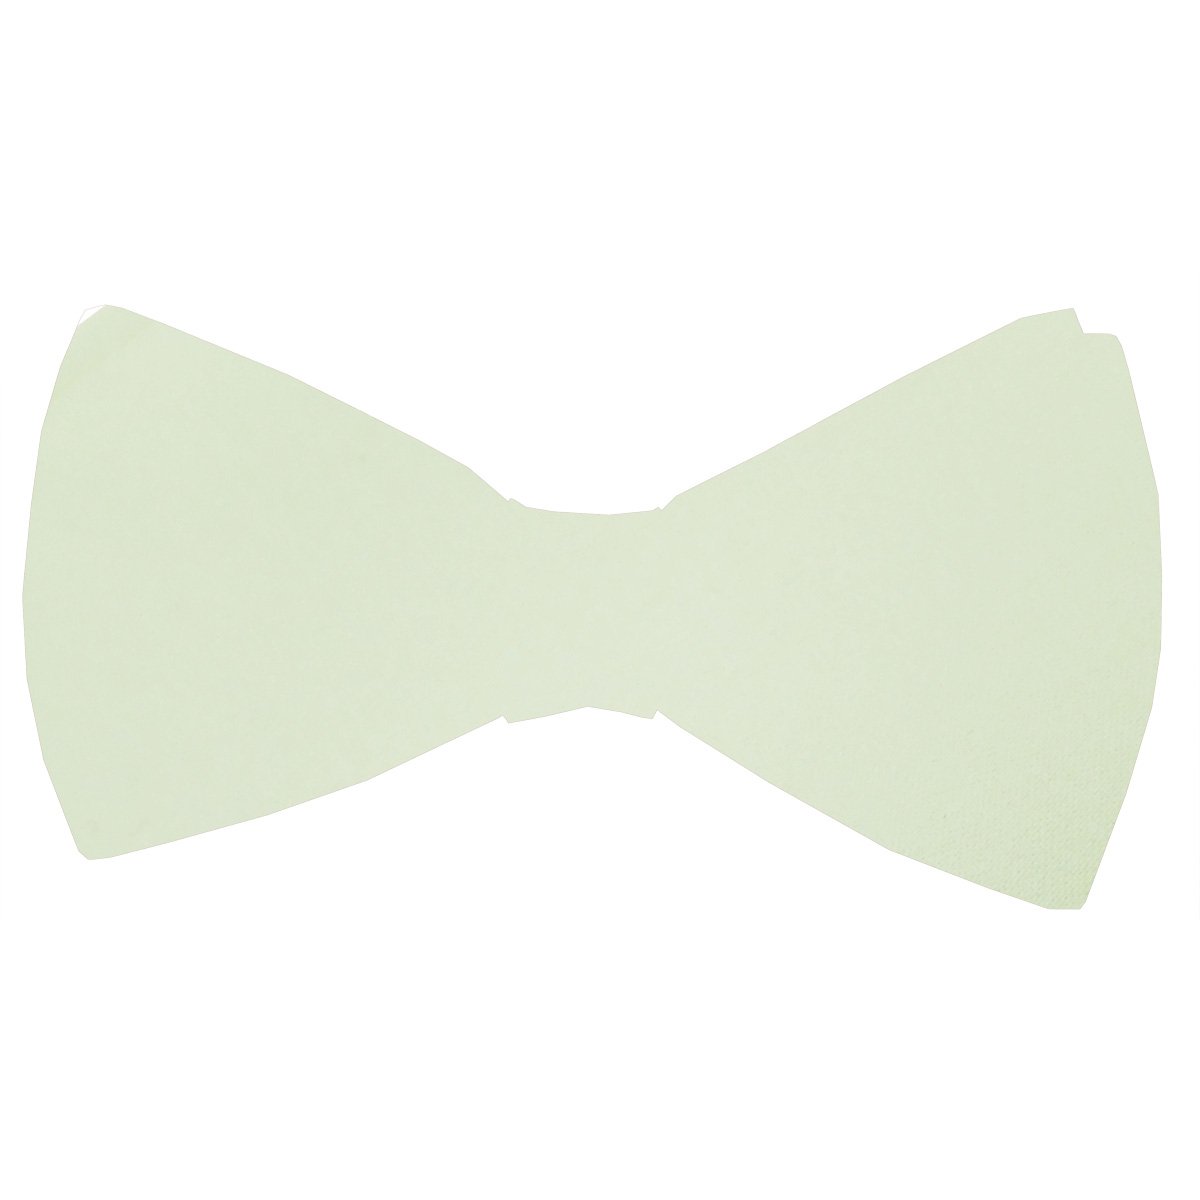 Pale Mint Bow Tie - Wedding